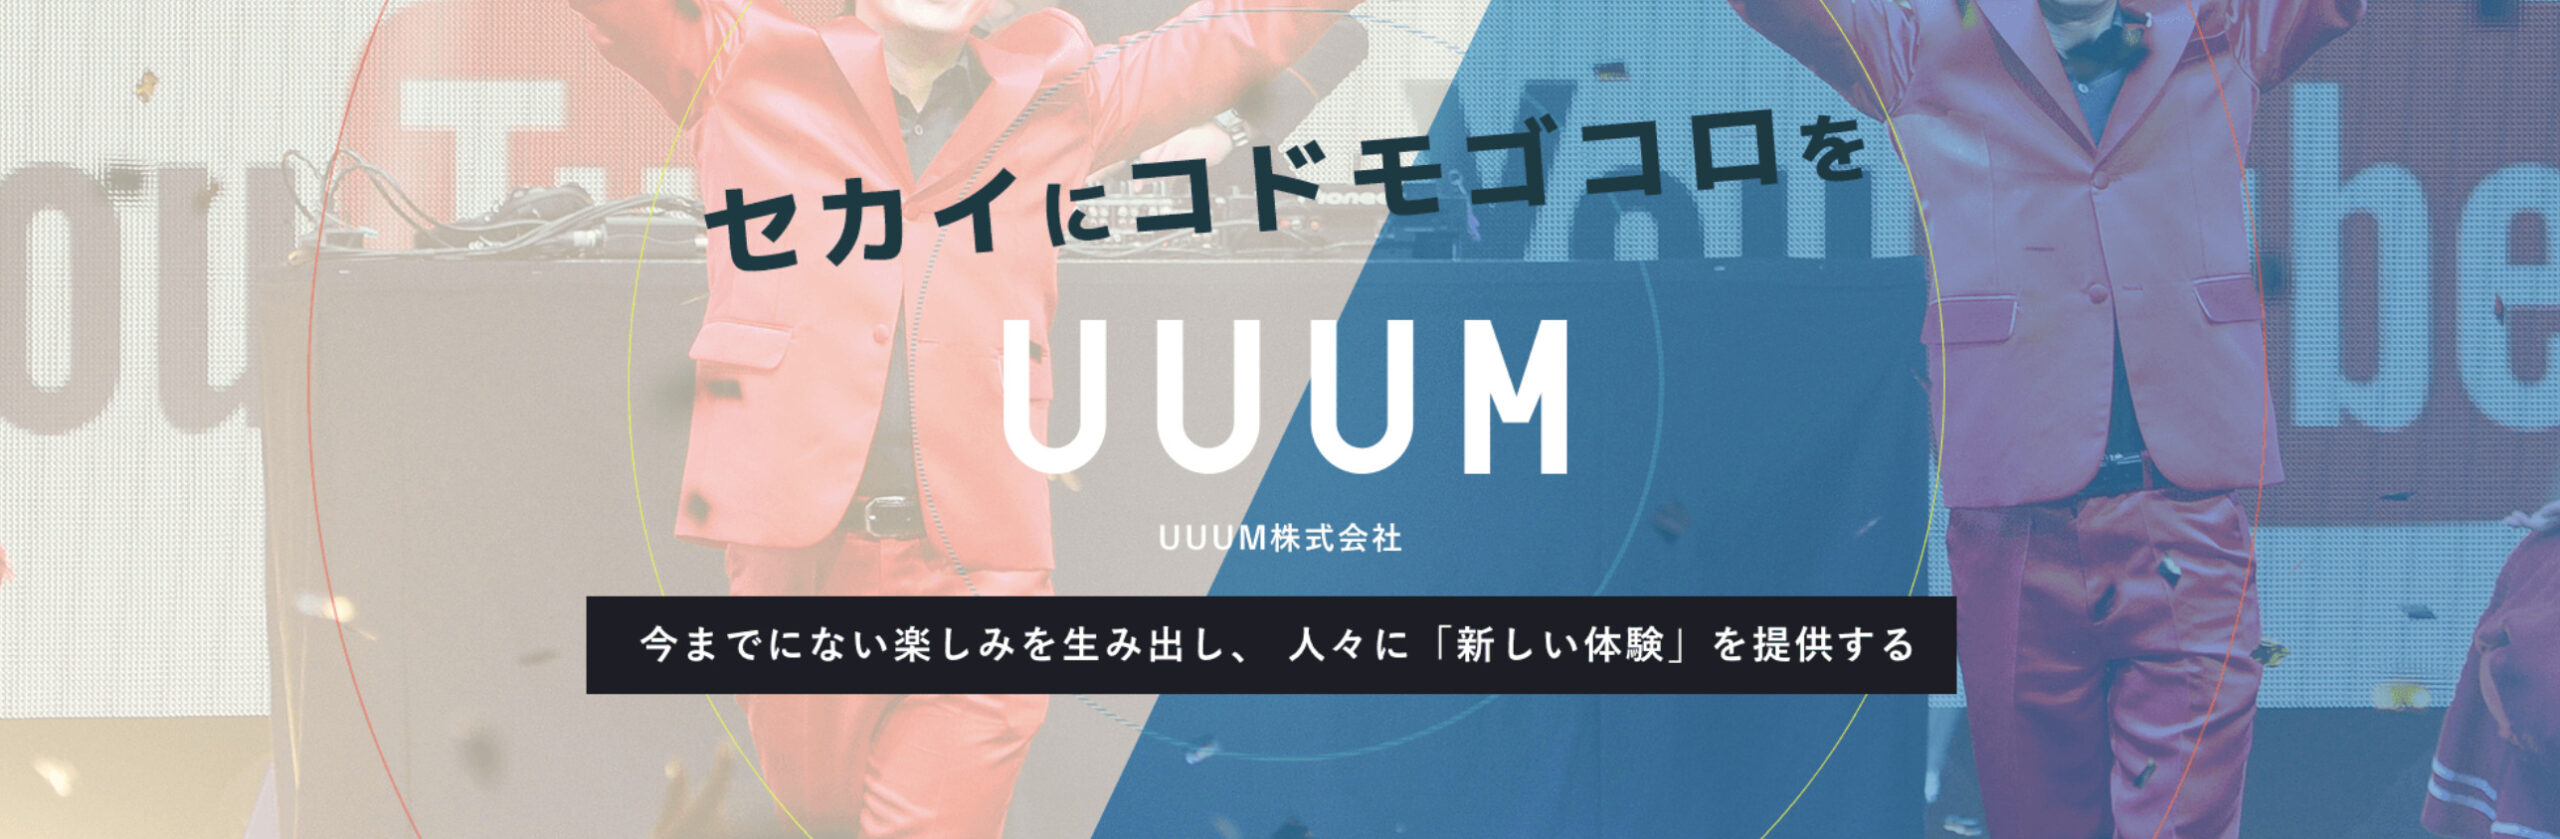 UUUM株式会社の公式サイト画像